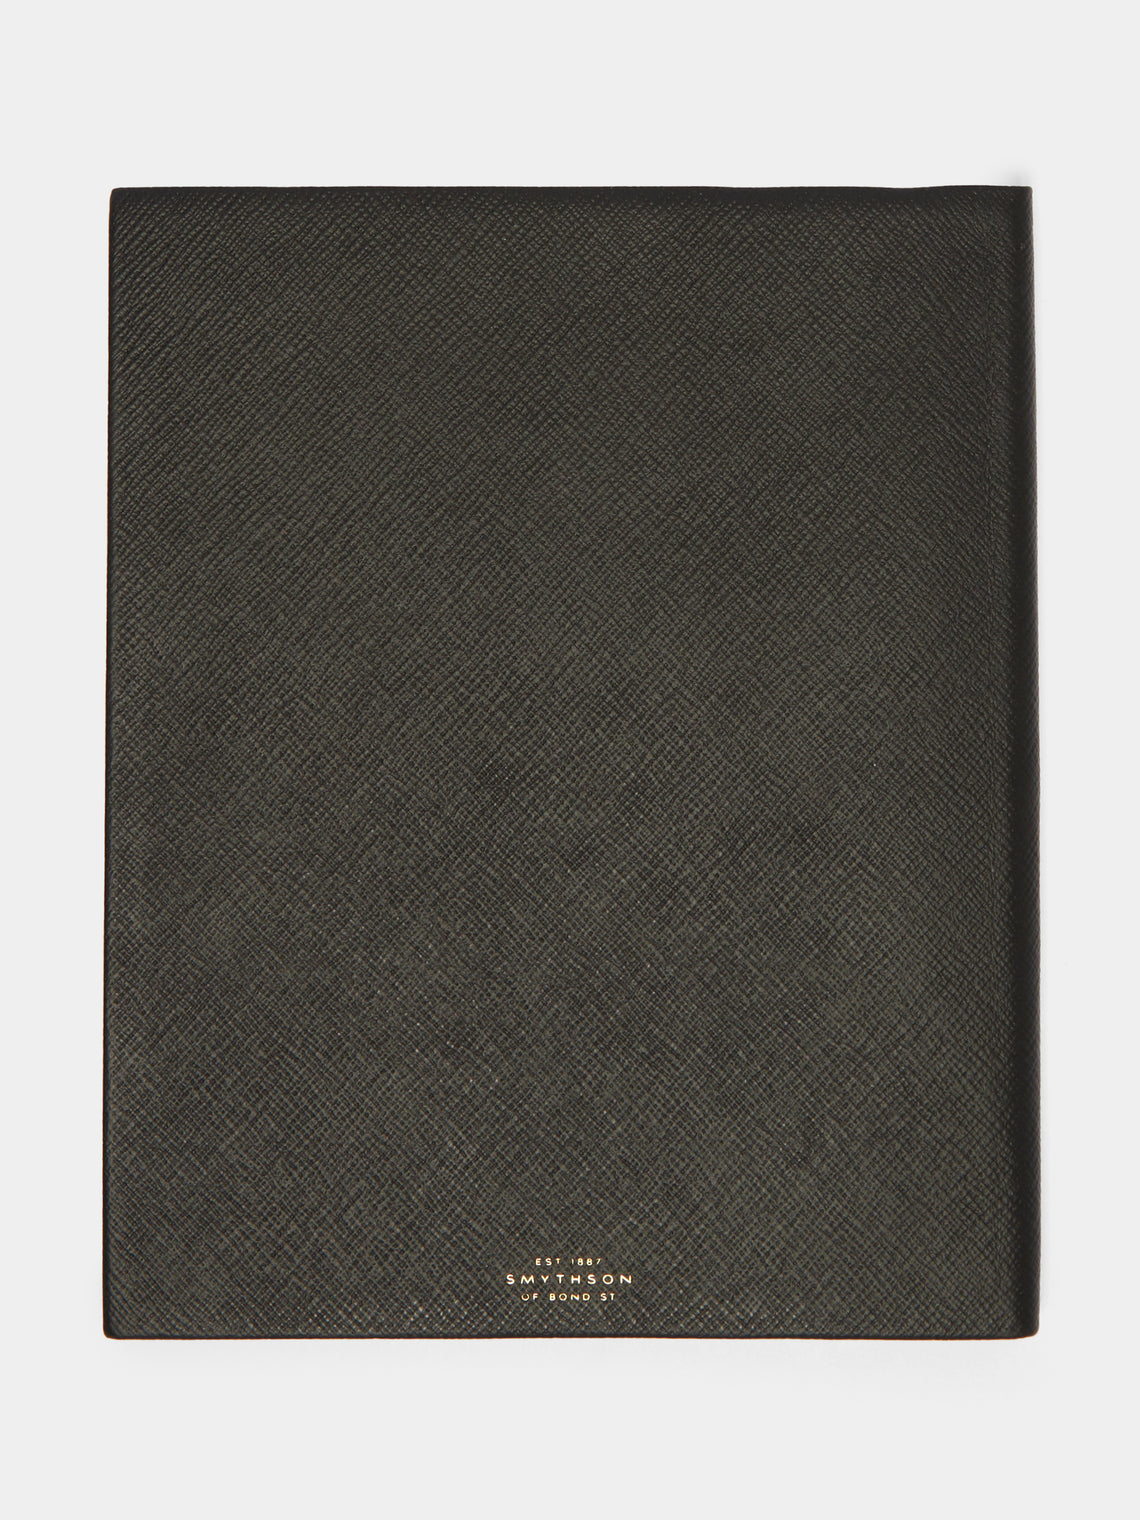 Smythson - Portobello Leather Notebook - Black - ABASK